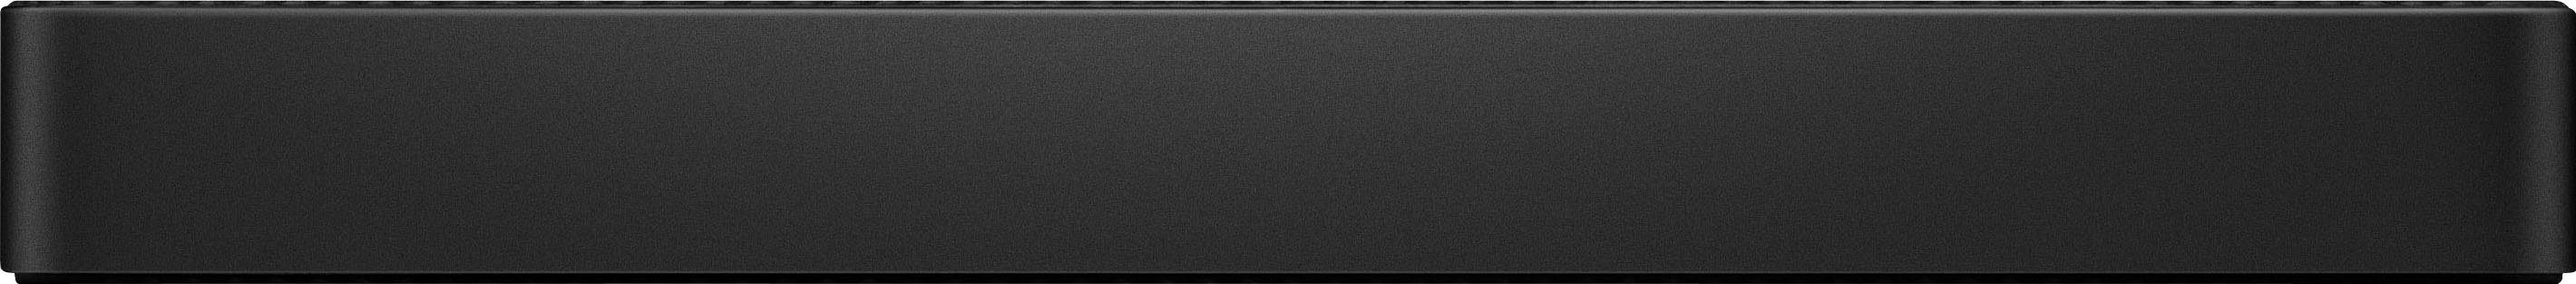 HDD-Festplatte Portable Expansion 2,5" Seagate TB) (2 2TB externe